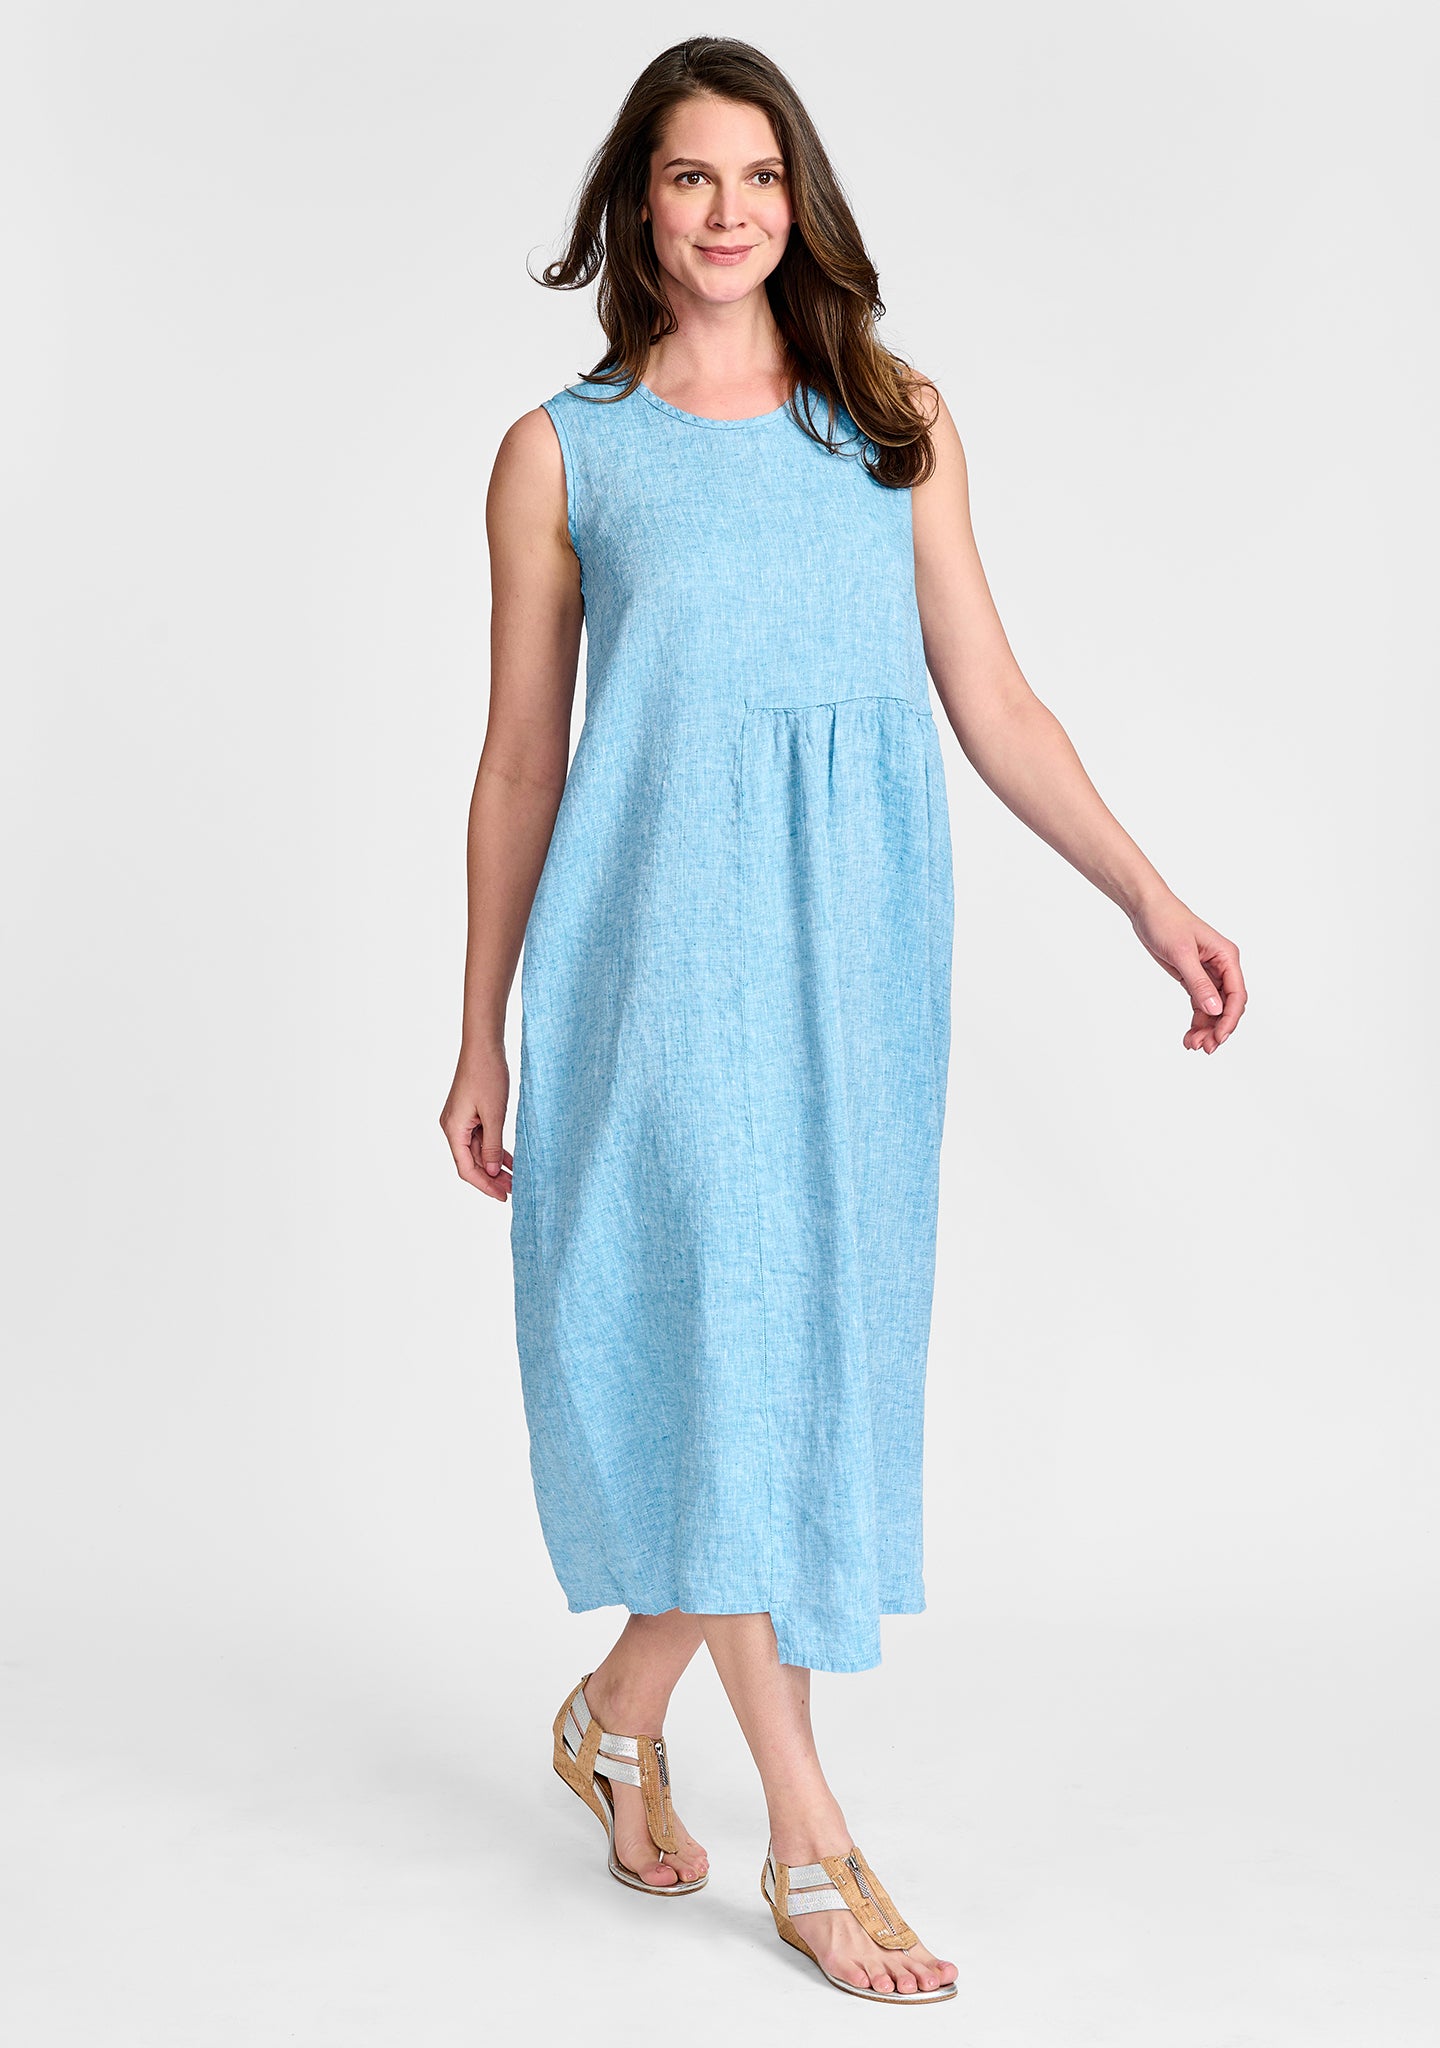 sybil dress linen midi dress blue